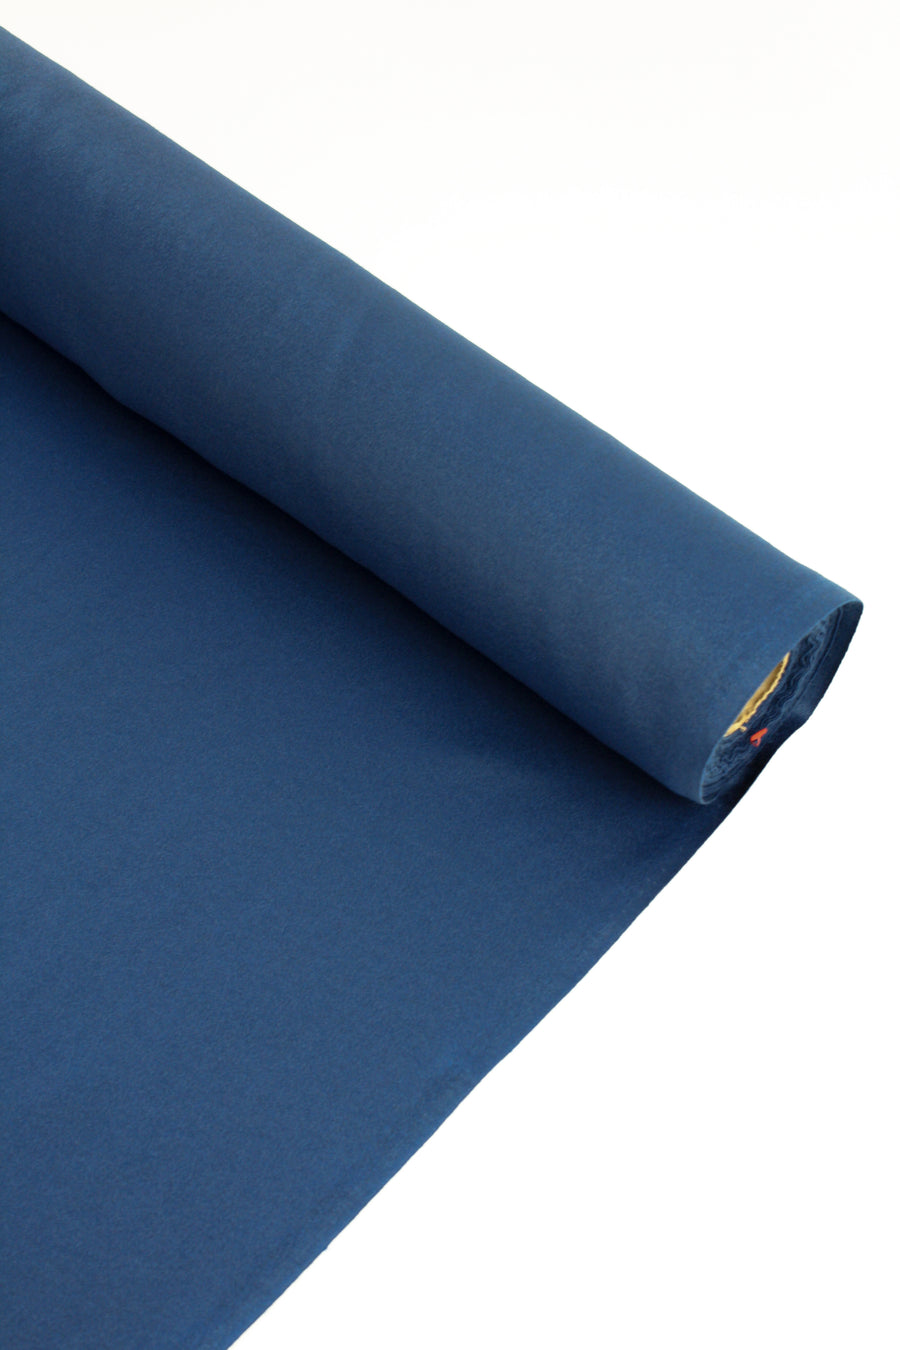 Wool Crepe Suiting | Lapis Blue #5